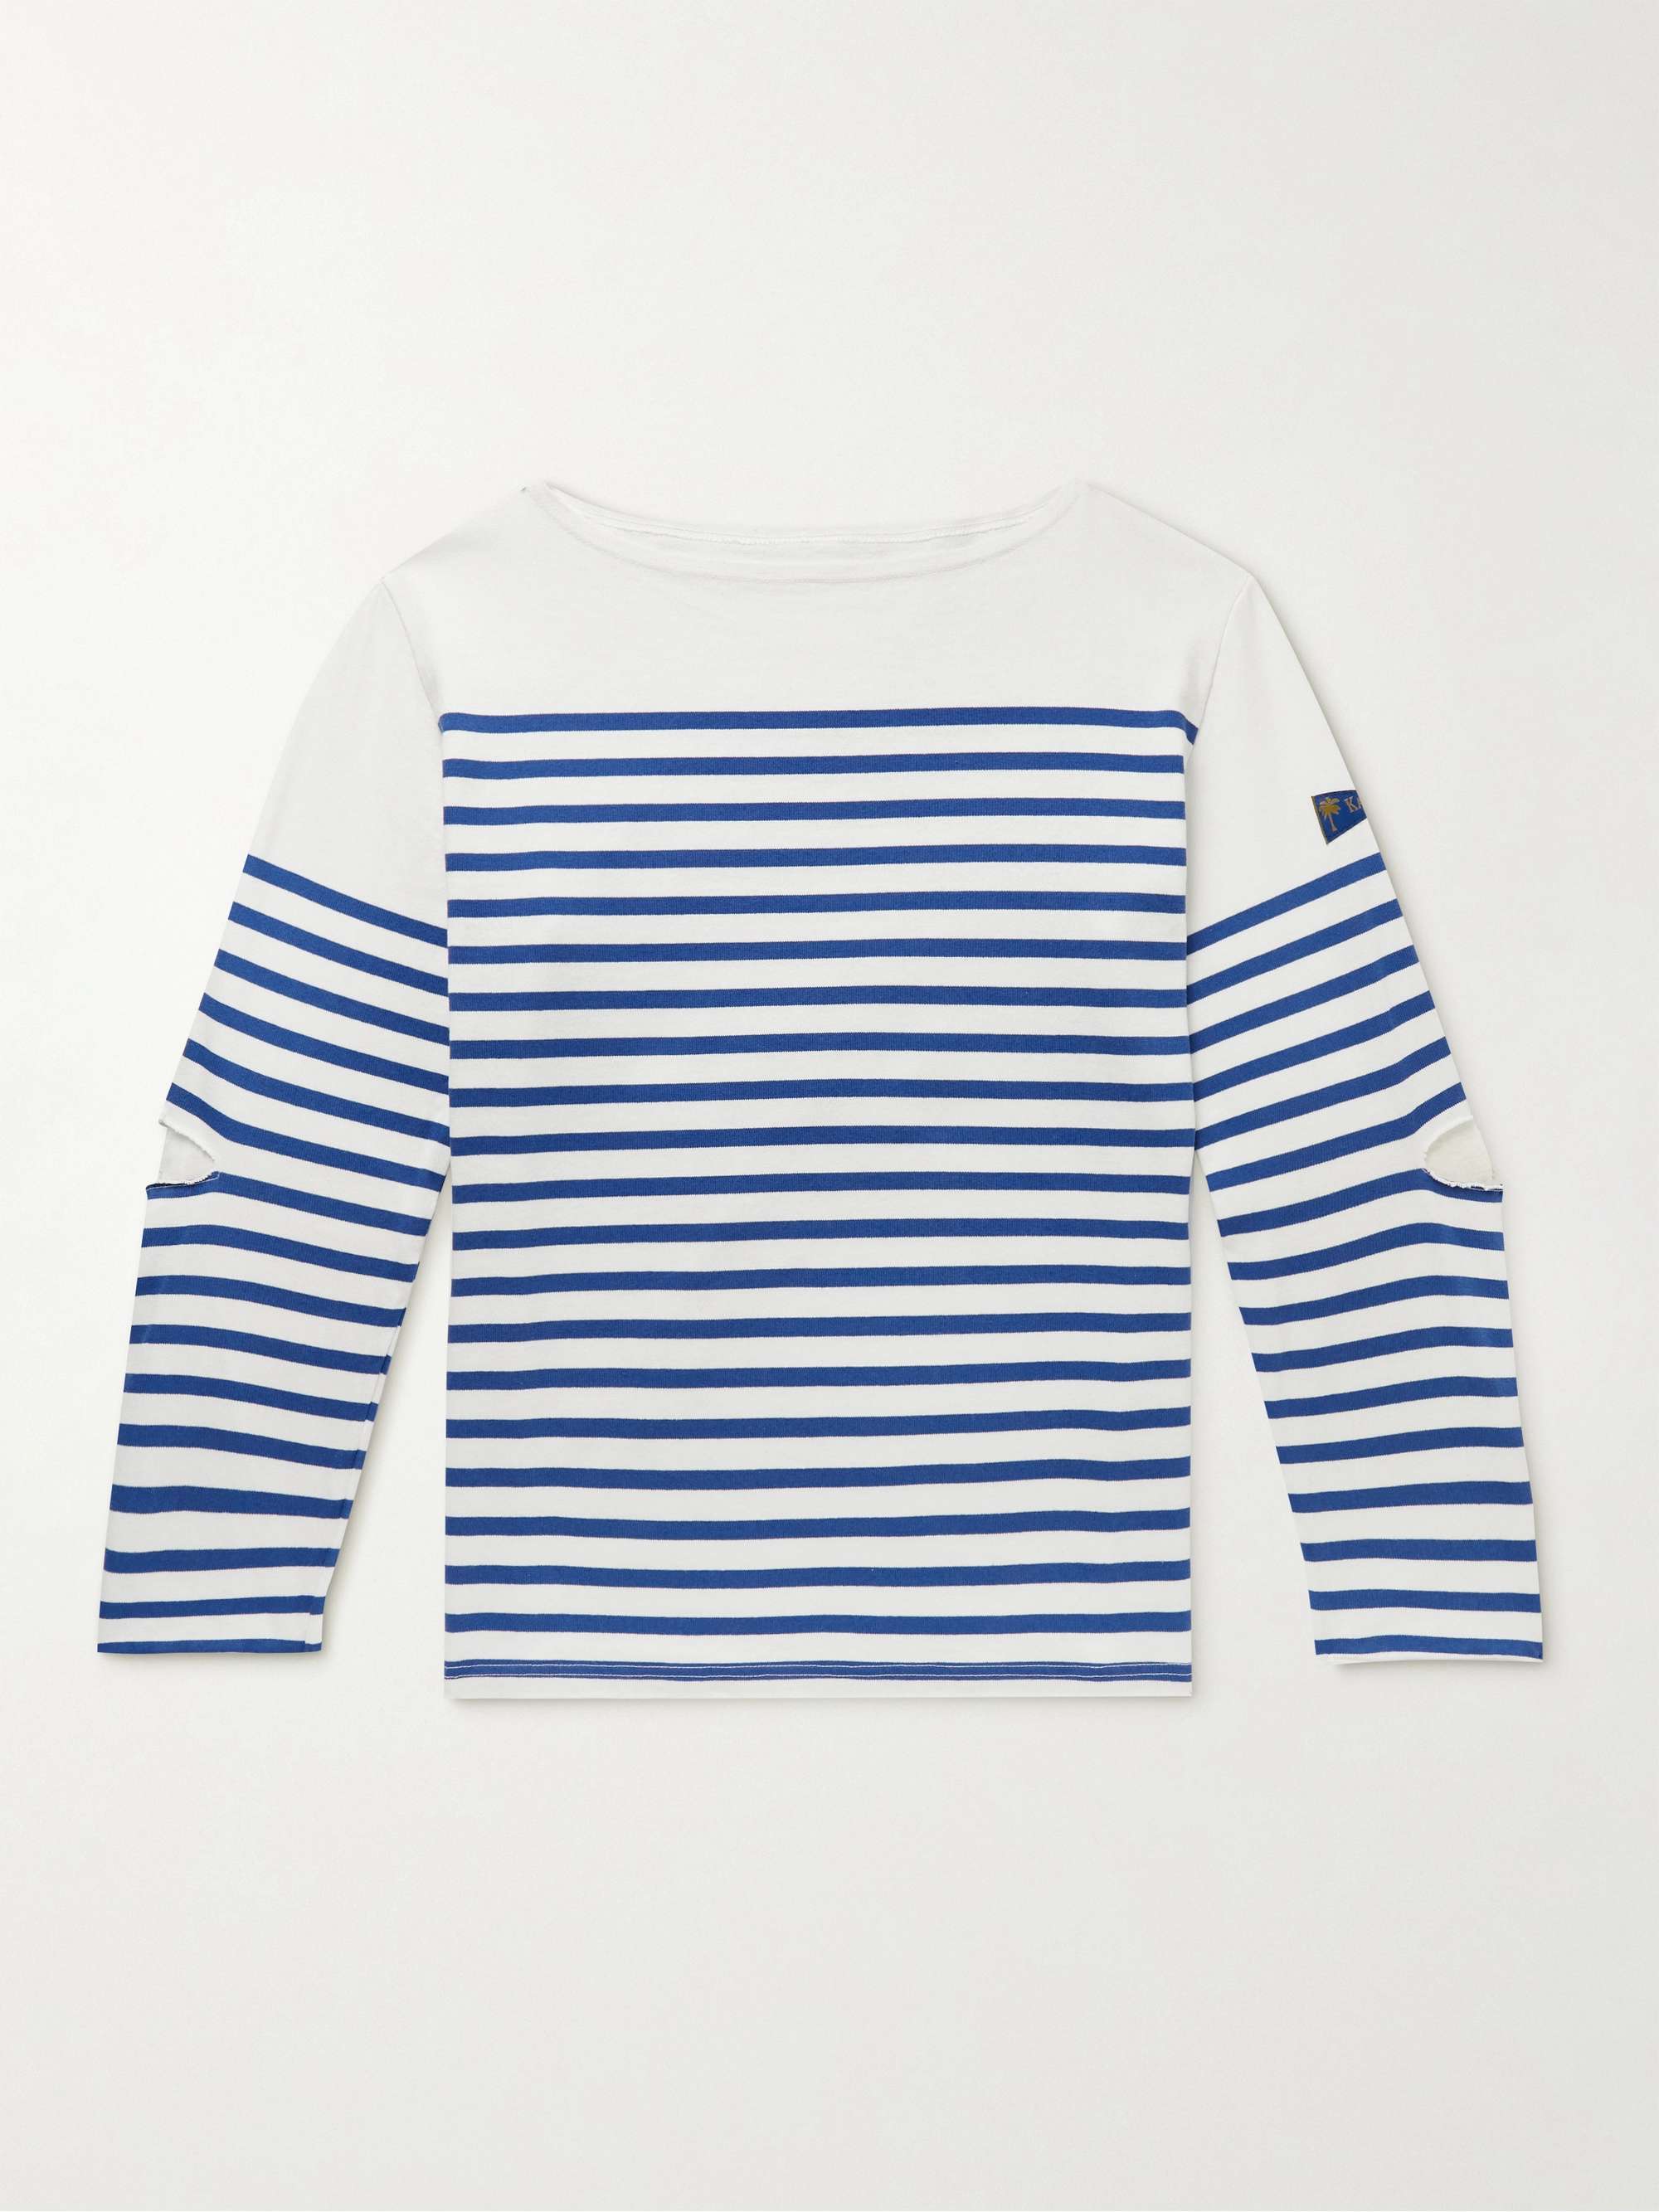 KAPITAL Distressed Striped Cotton-Jersey T-Shirt | MR PORTER